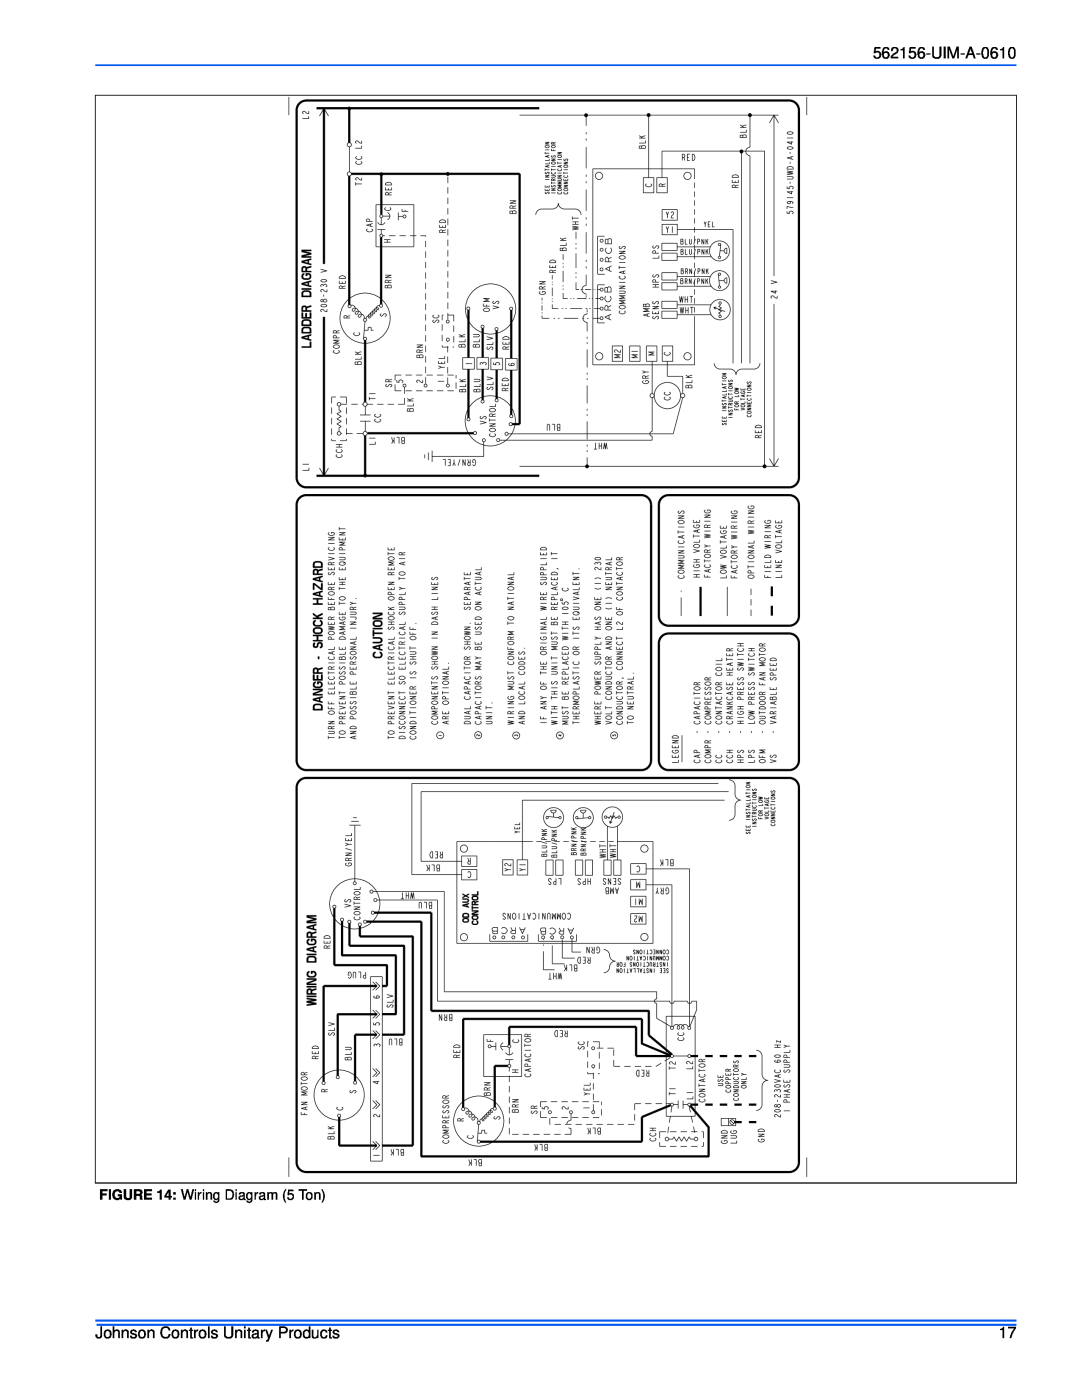 Johnson Controls AL6B SERIES, 16 SEER - CZF, AC6B Johnson Controls Unitary Products, UIM-A-0610, Wiring Diagram 5 Ton 